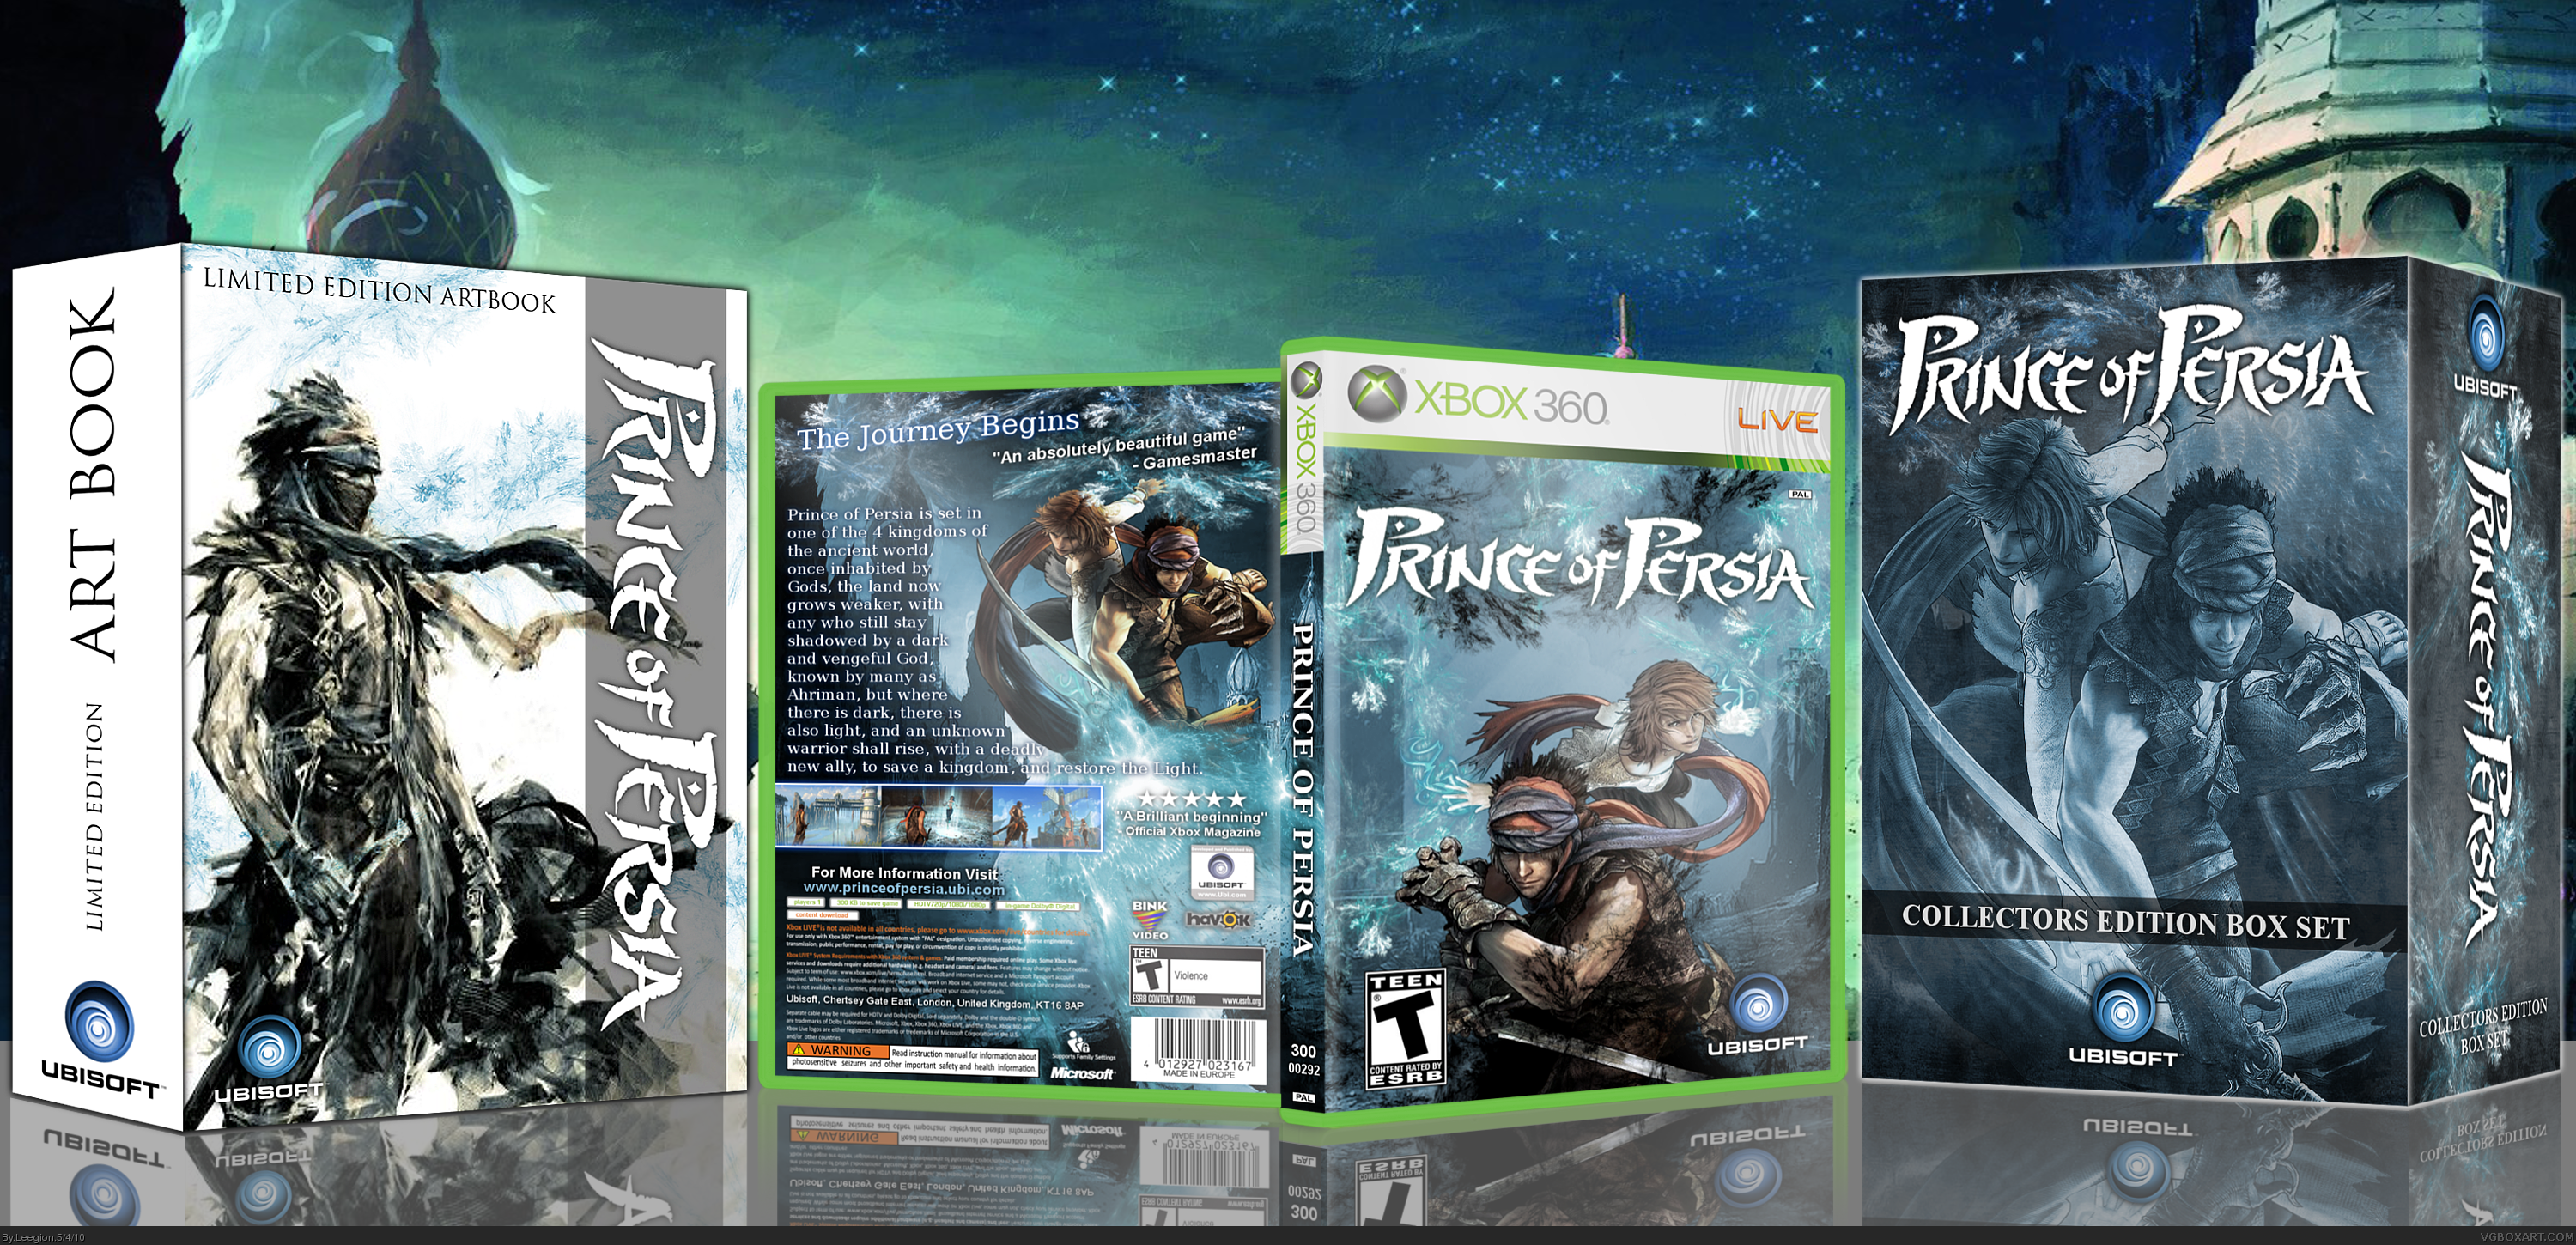 Prince Of Persia: Collectors Edition box cover